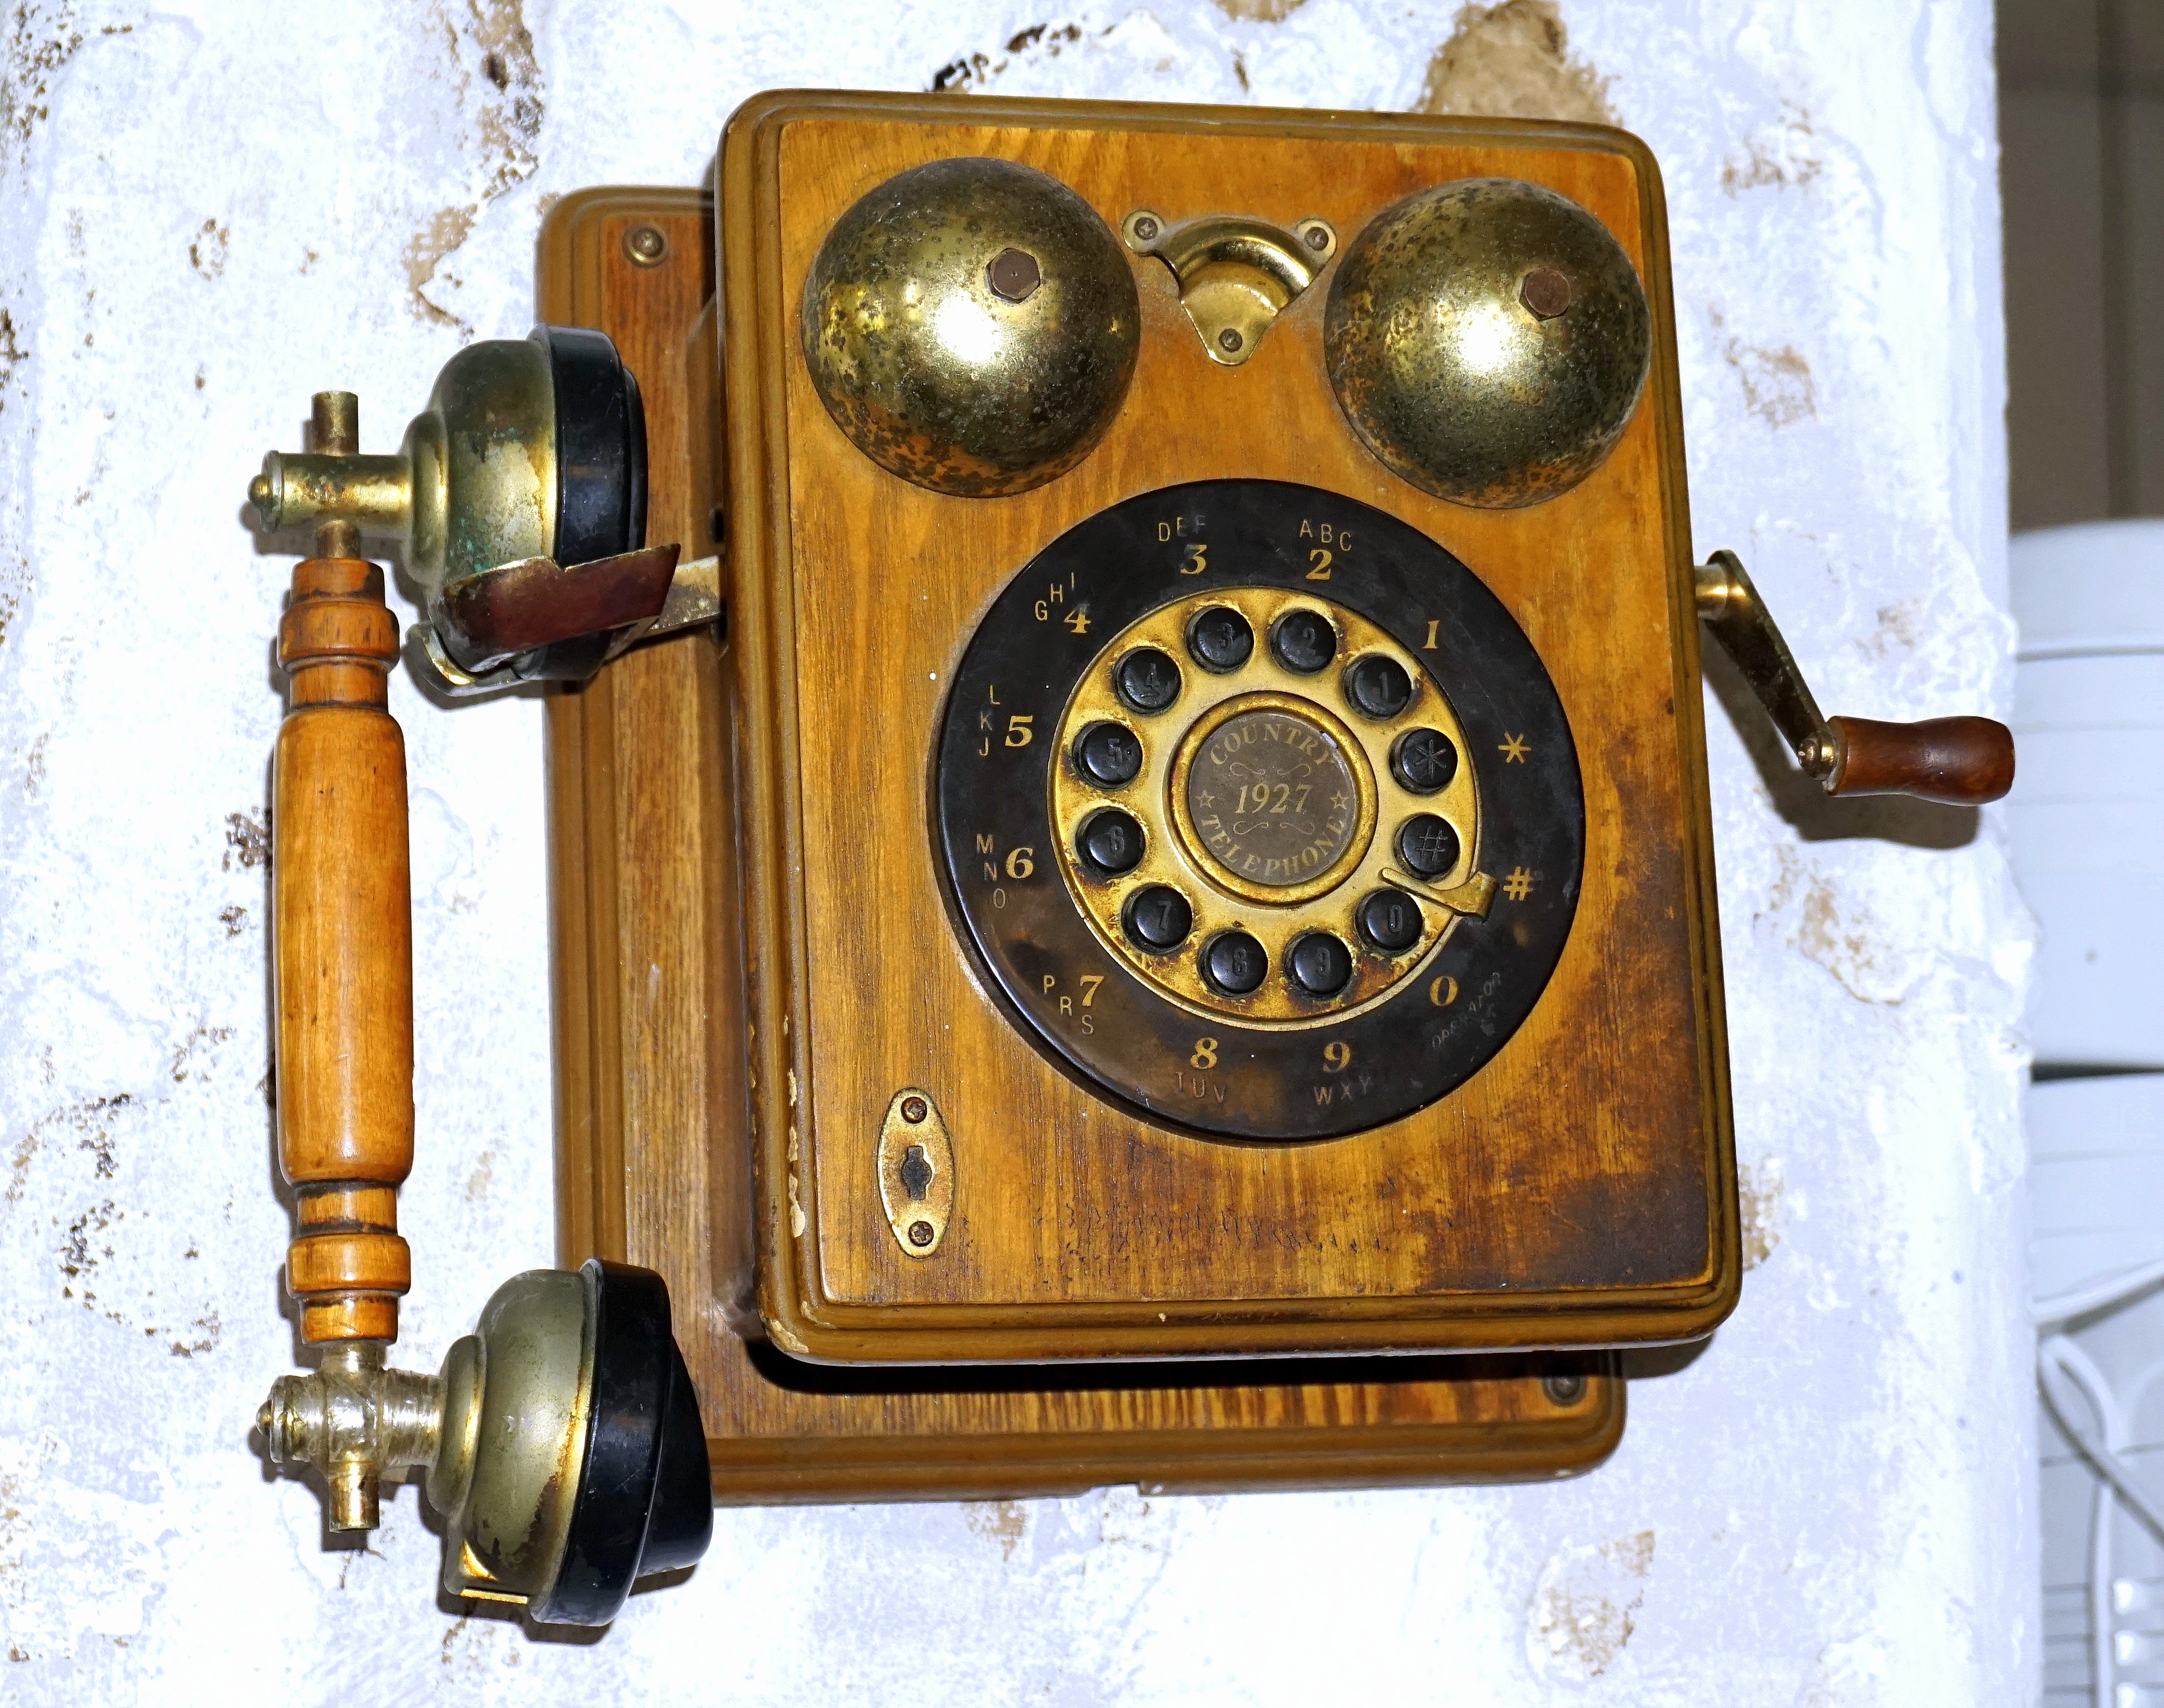 Где найти старый телефон. Старый телефон. Антикварный телефонный аппарат. Старинный телефон. Старый телефонный аппарат.